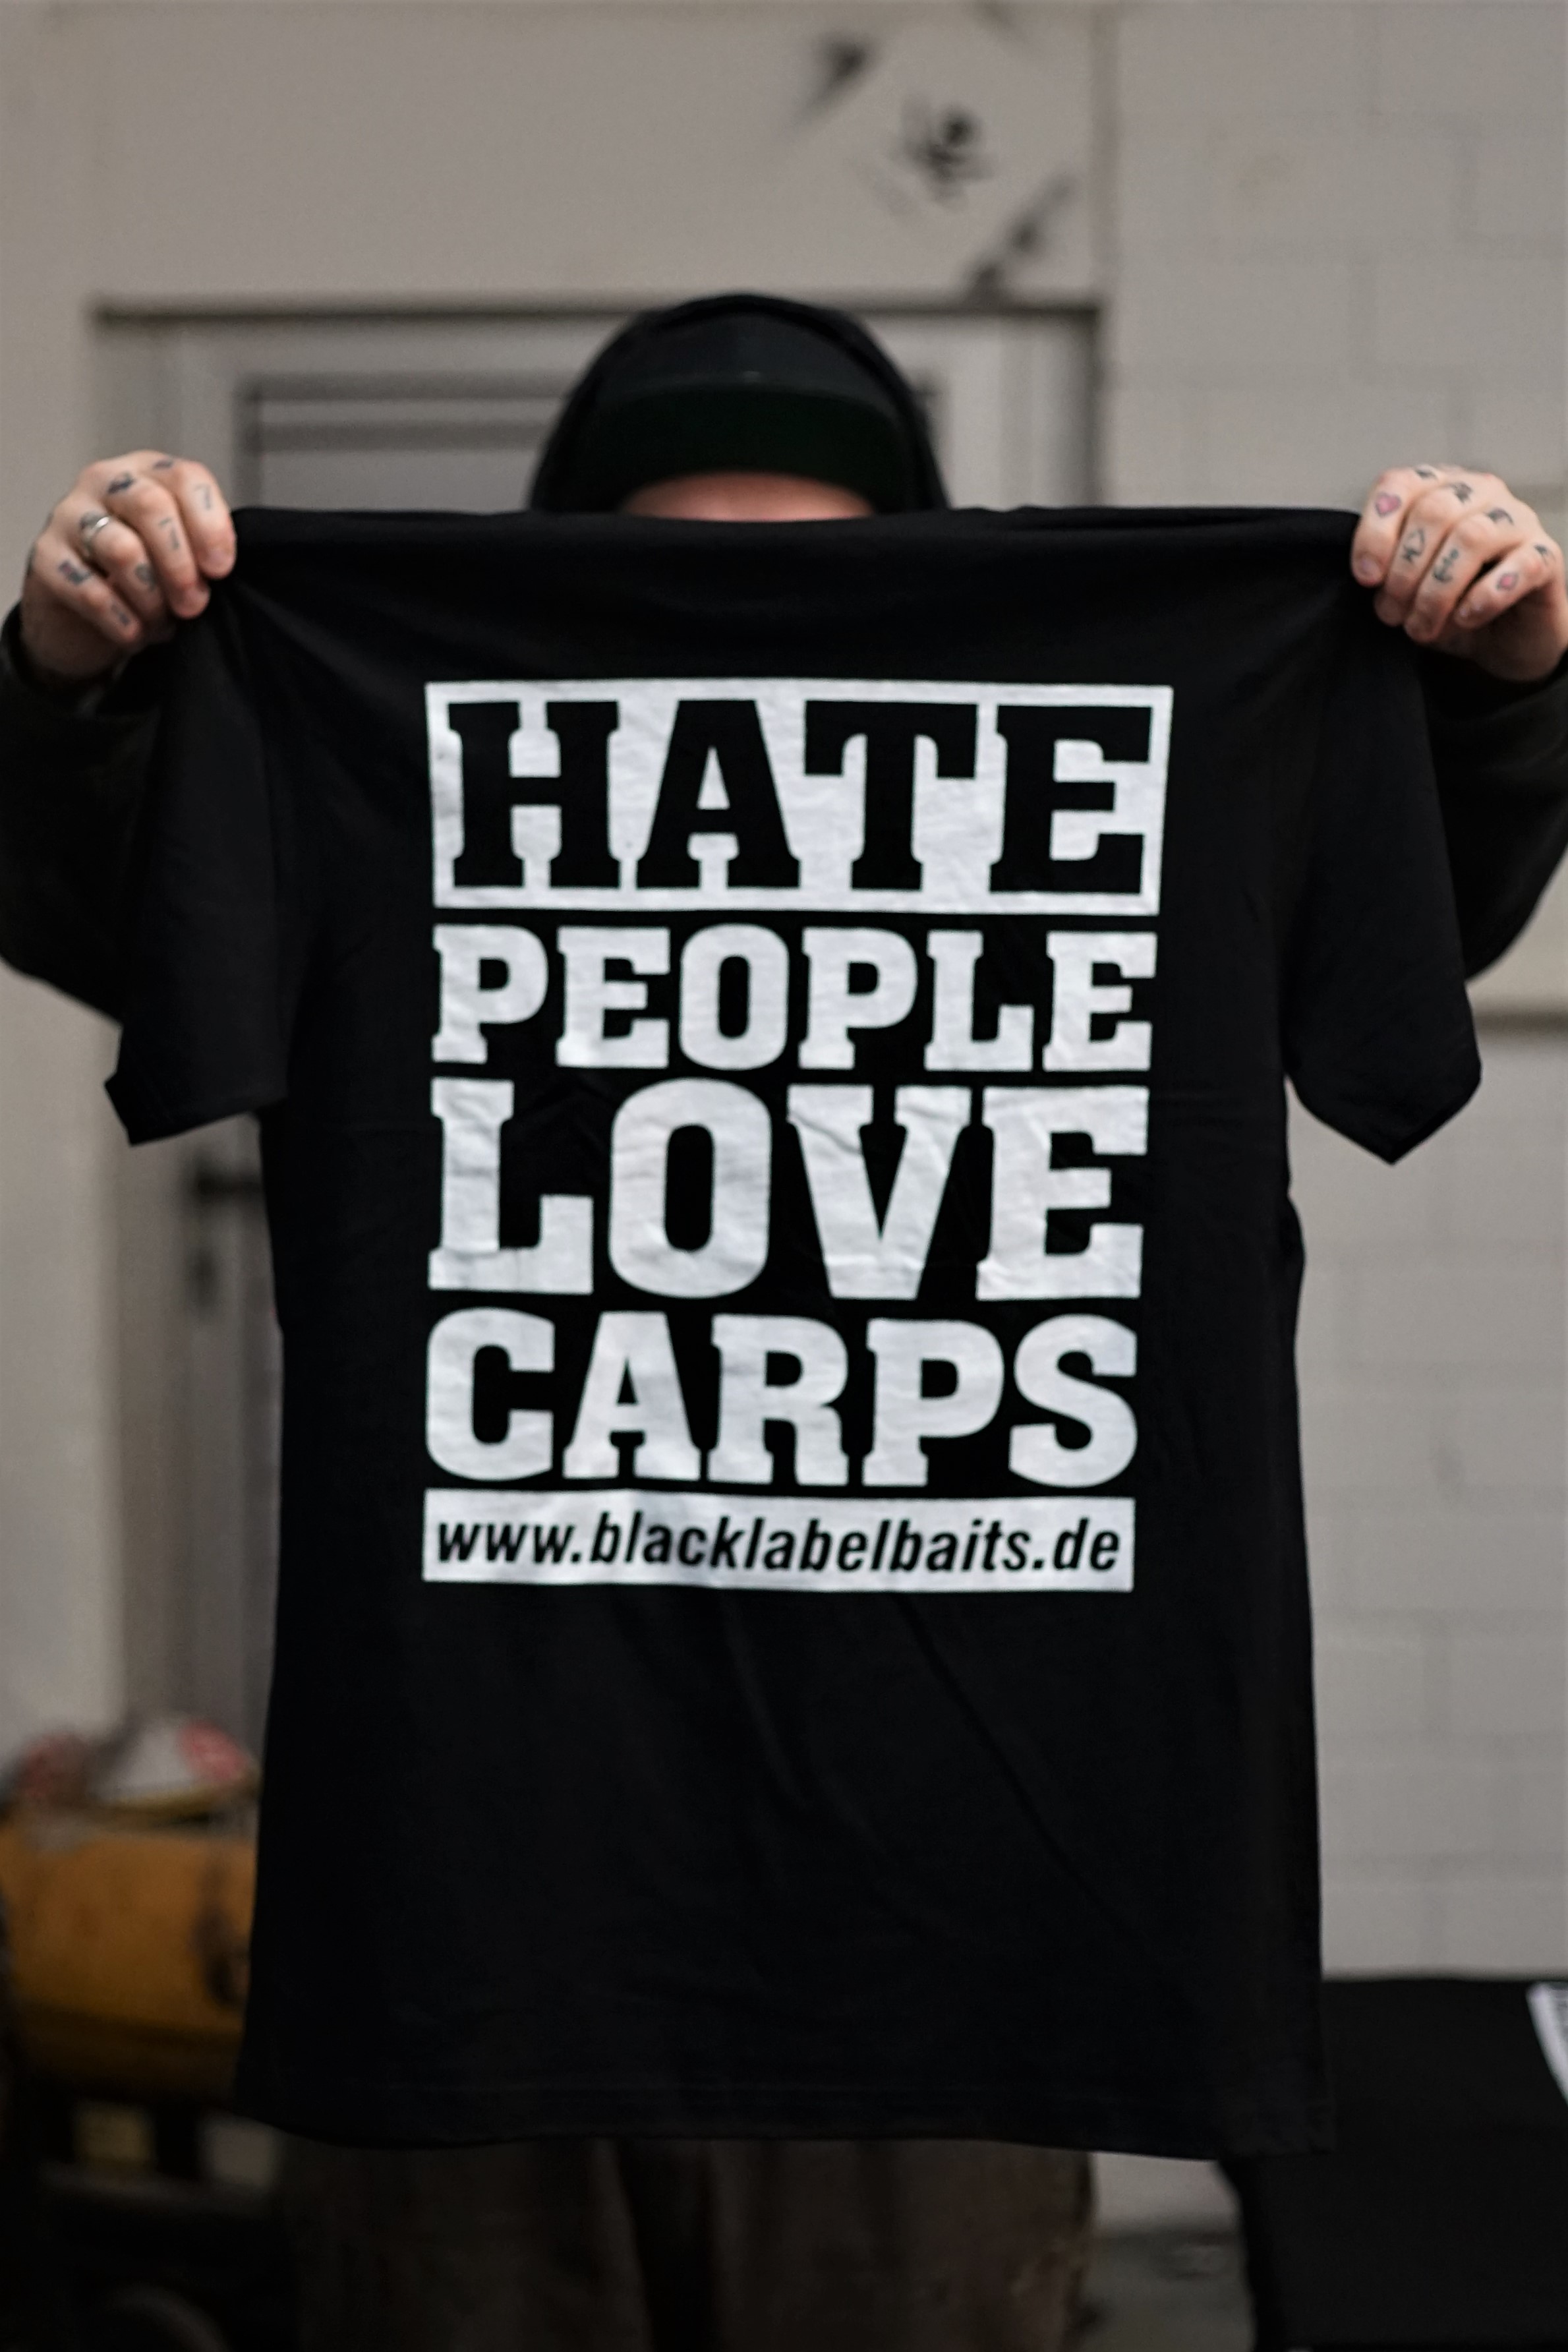 "HATE PEOPLE LOVE CARPS" Shirt